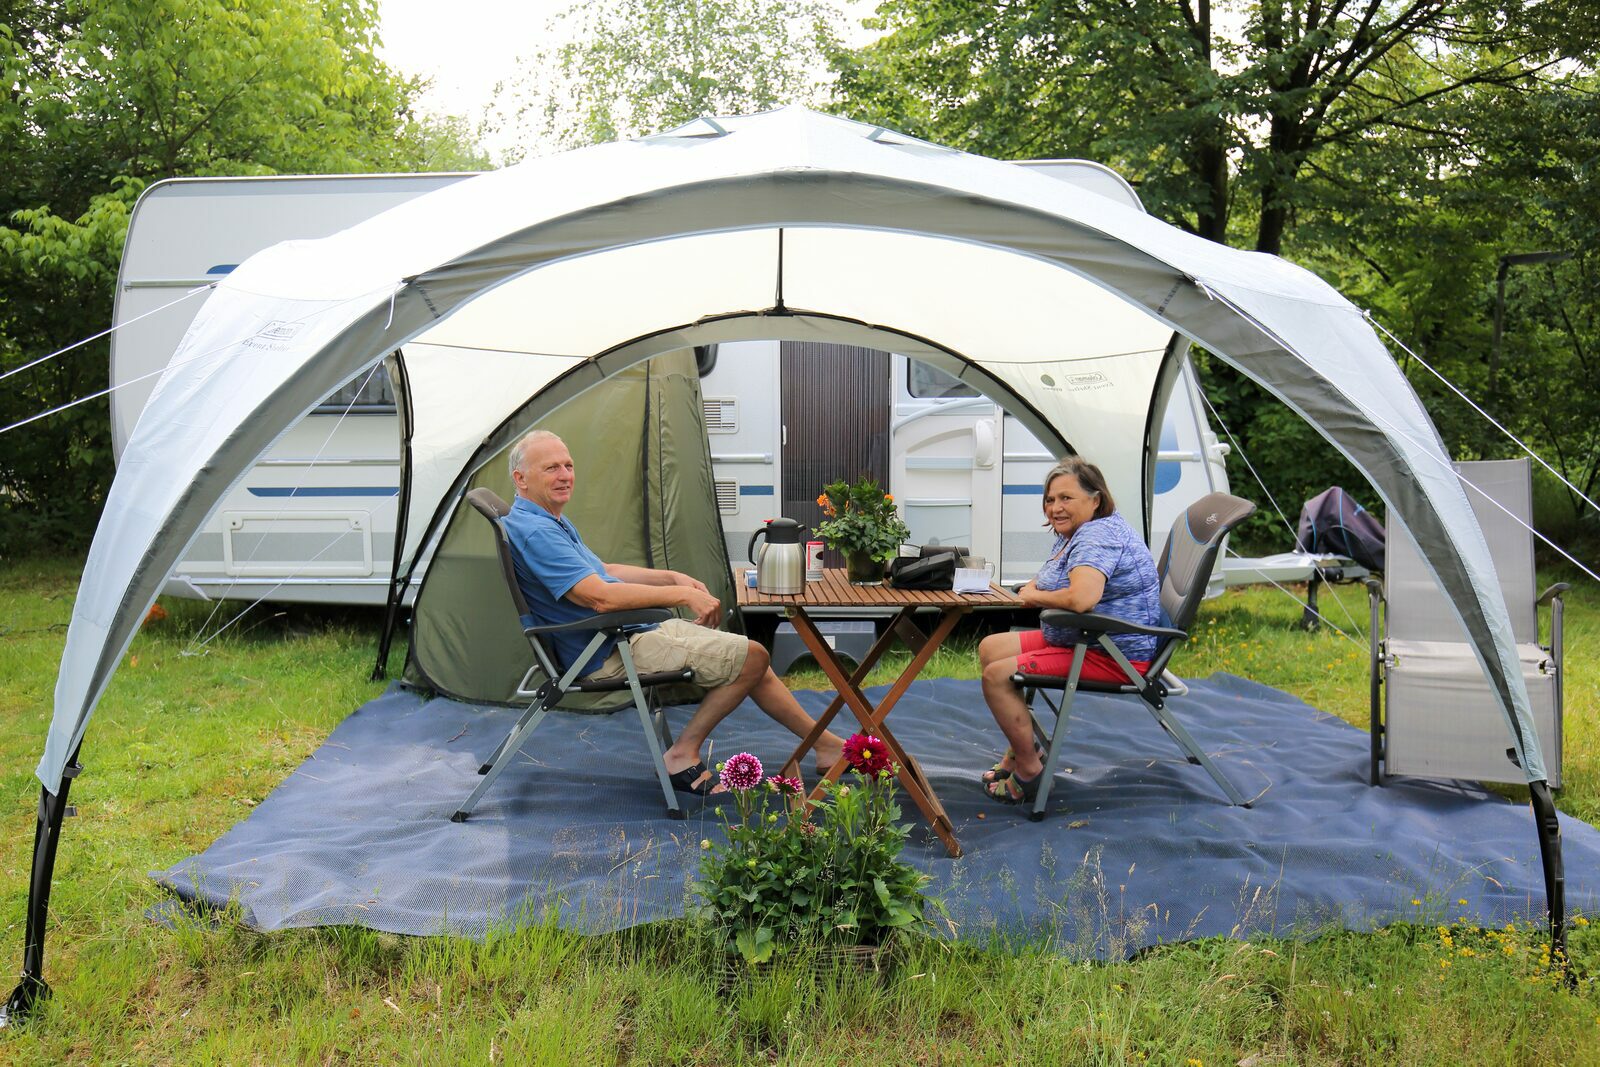 Camping Baalse Hei in Turnhout